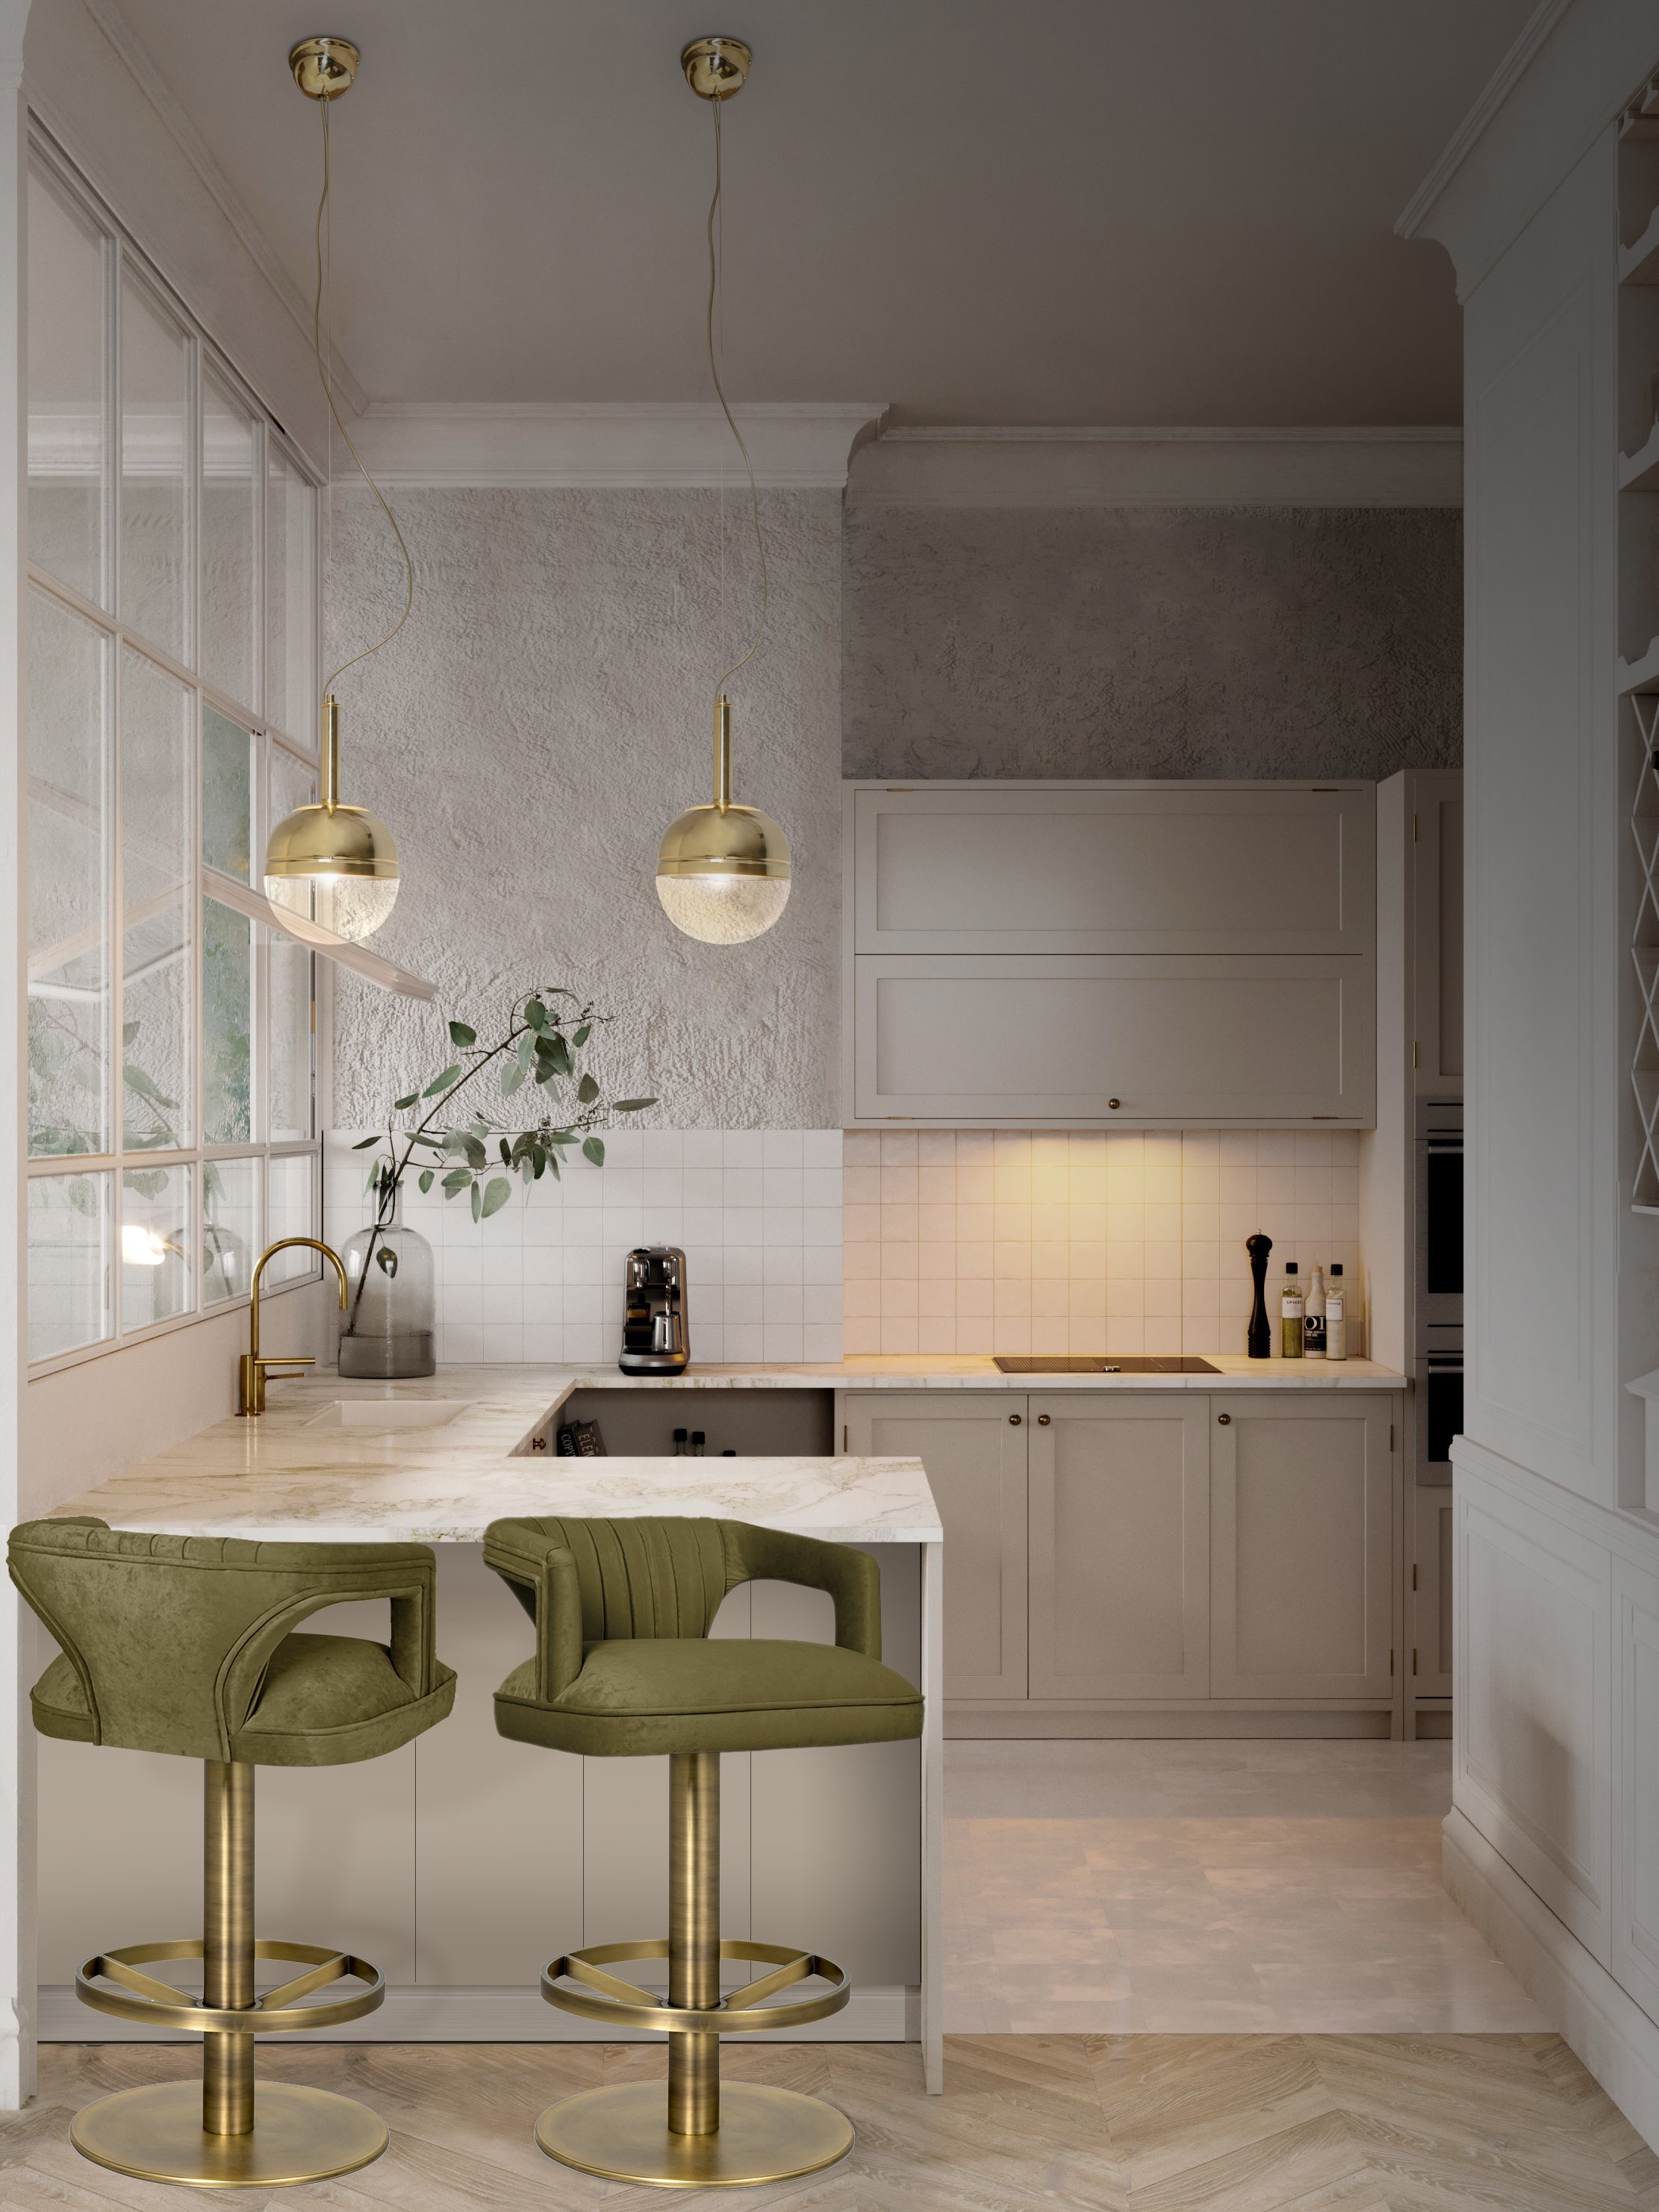 Mid-Century Kitchen with Swivel Counter Stool Upholstered in Green Velvet - Home'Society